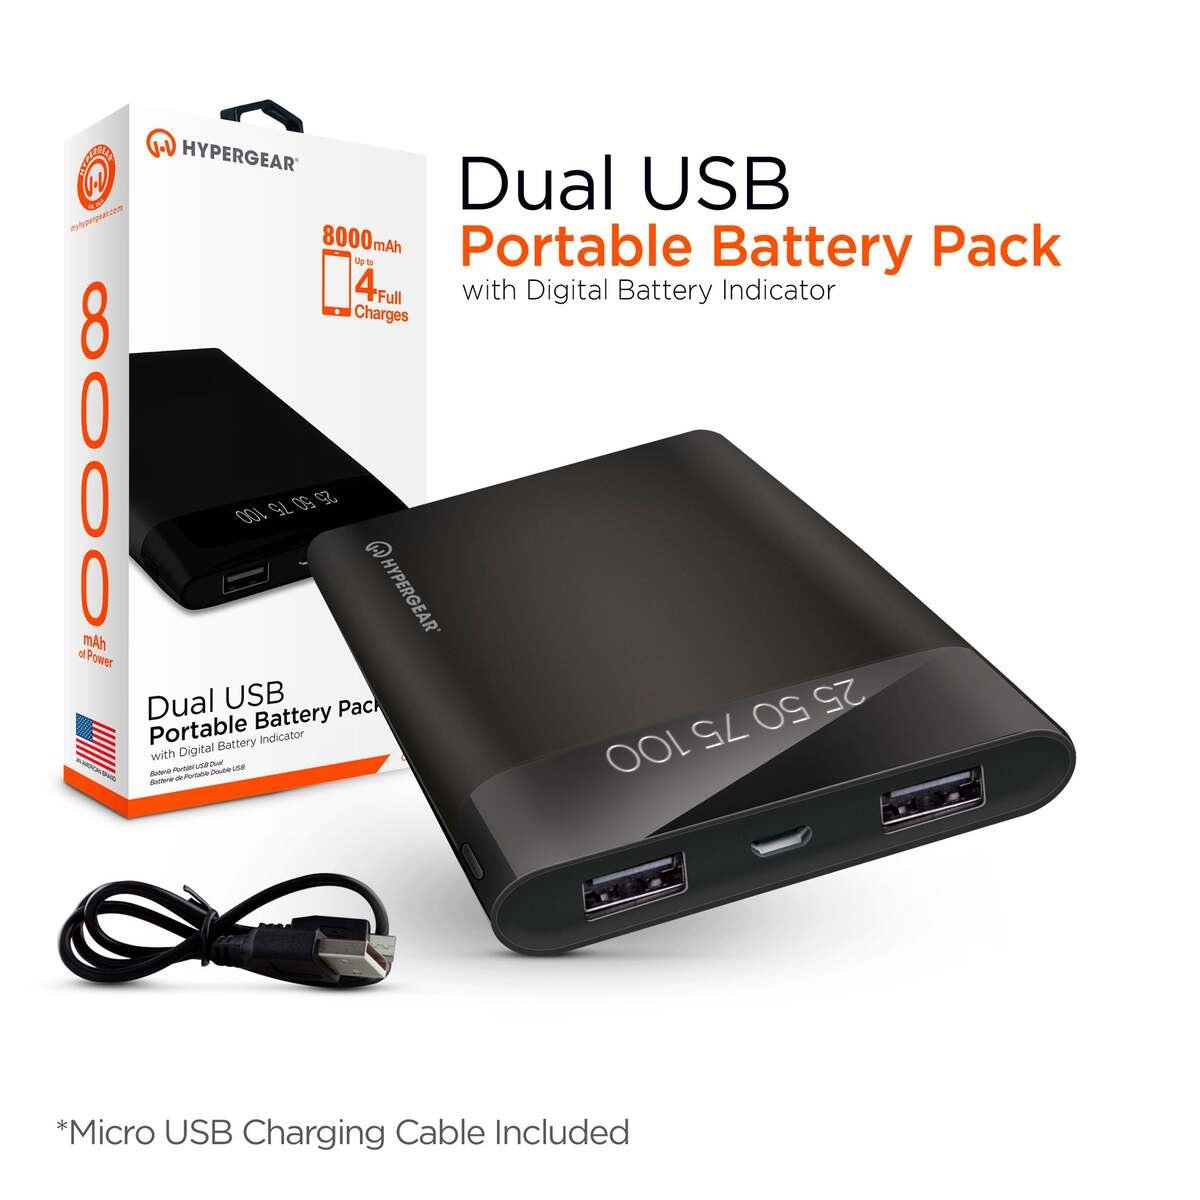 HYPERGEAR 16000mAh Universal Dual USB Portable Battery Pack with Digital Battery Indicator - Black